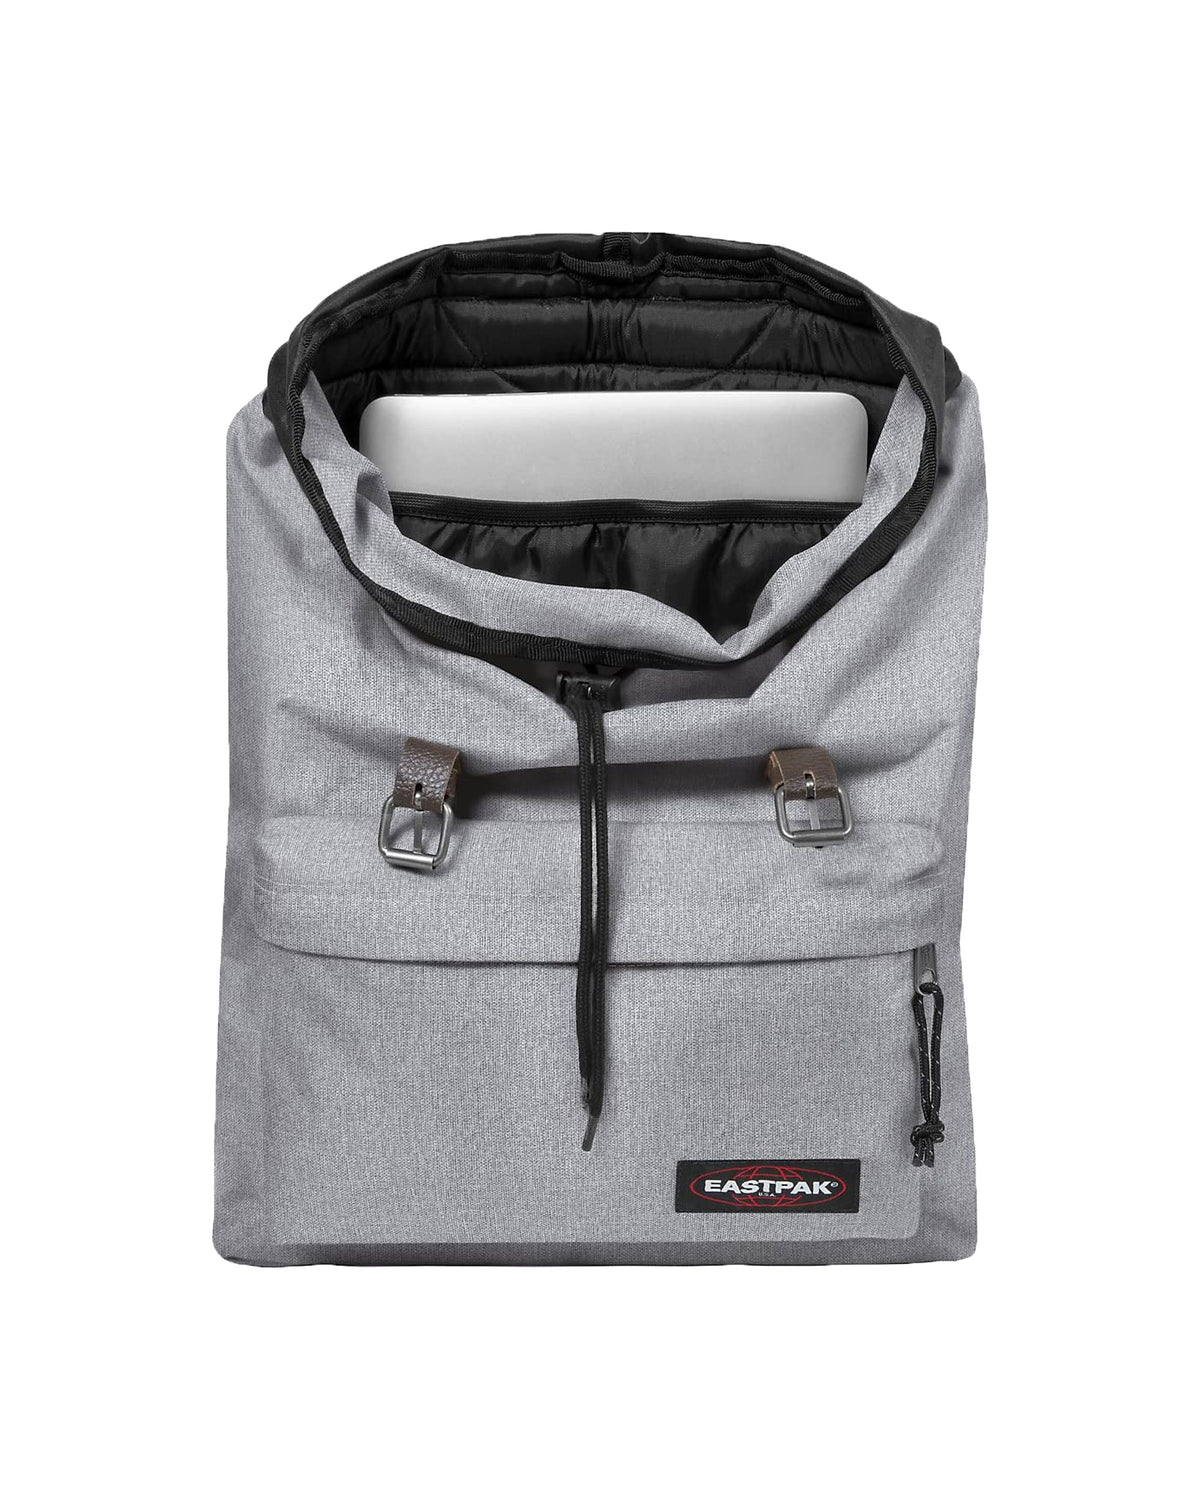 Backpack Eastpak London Grey